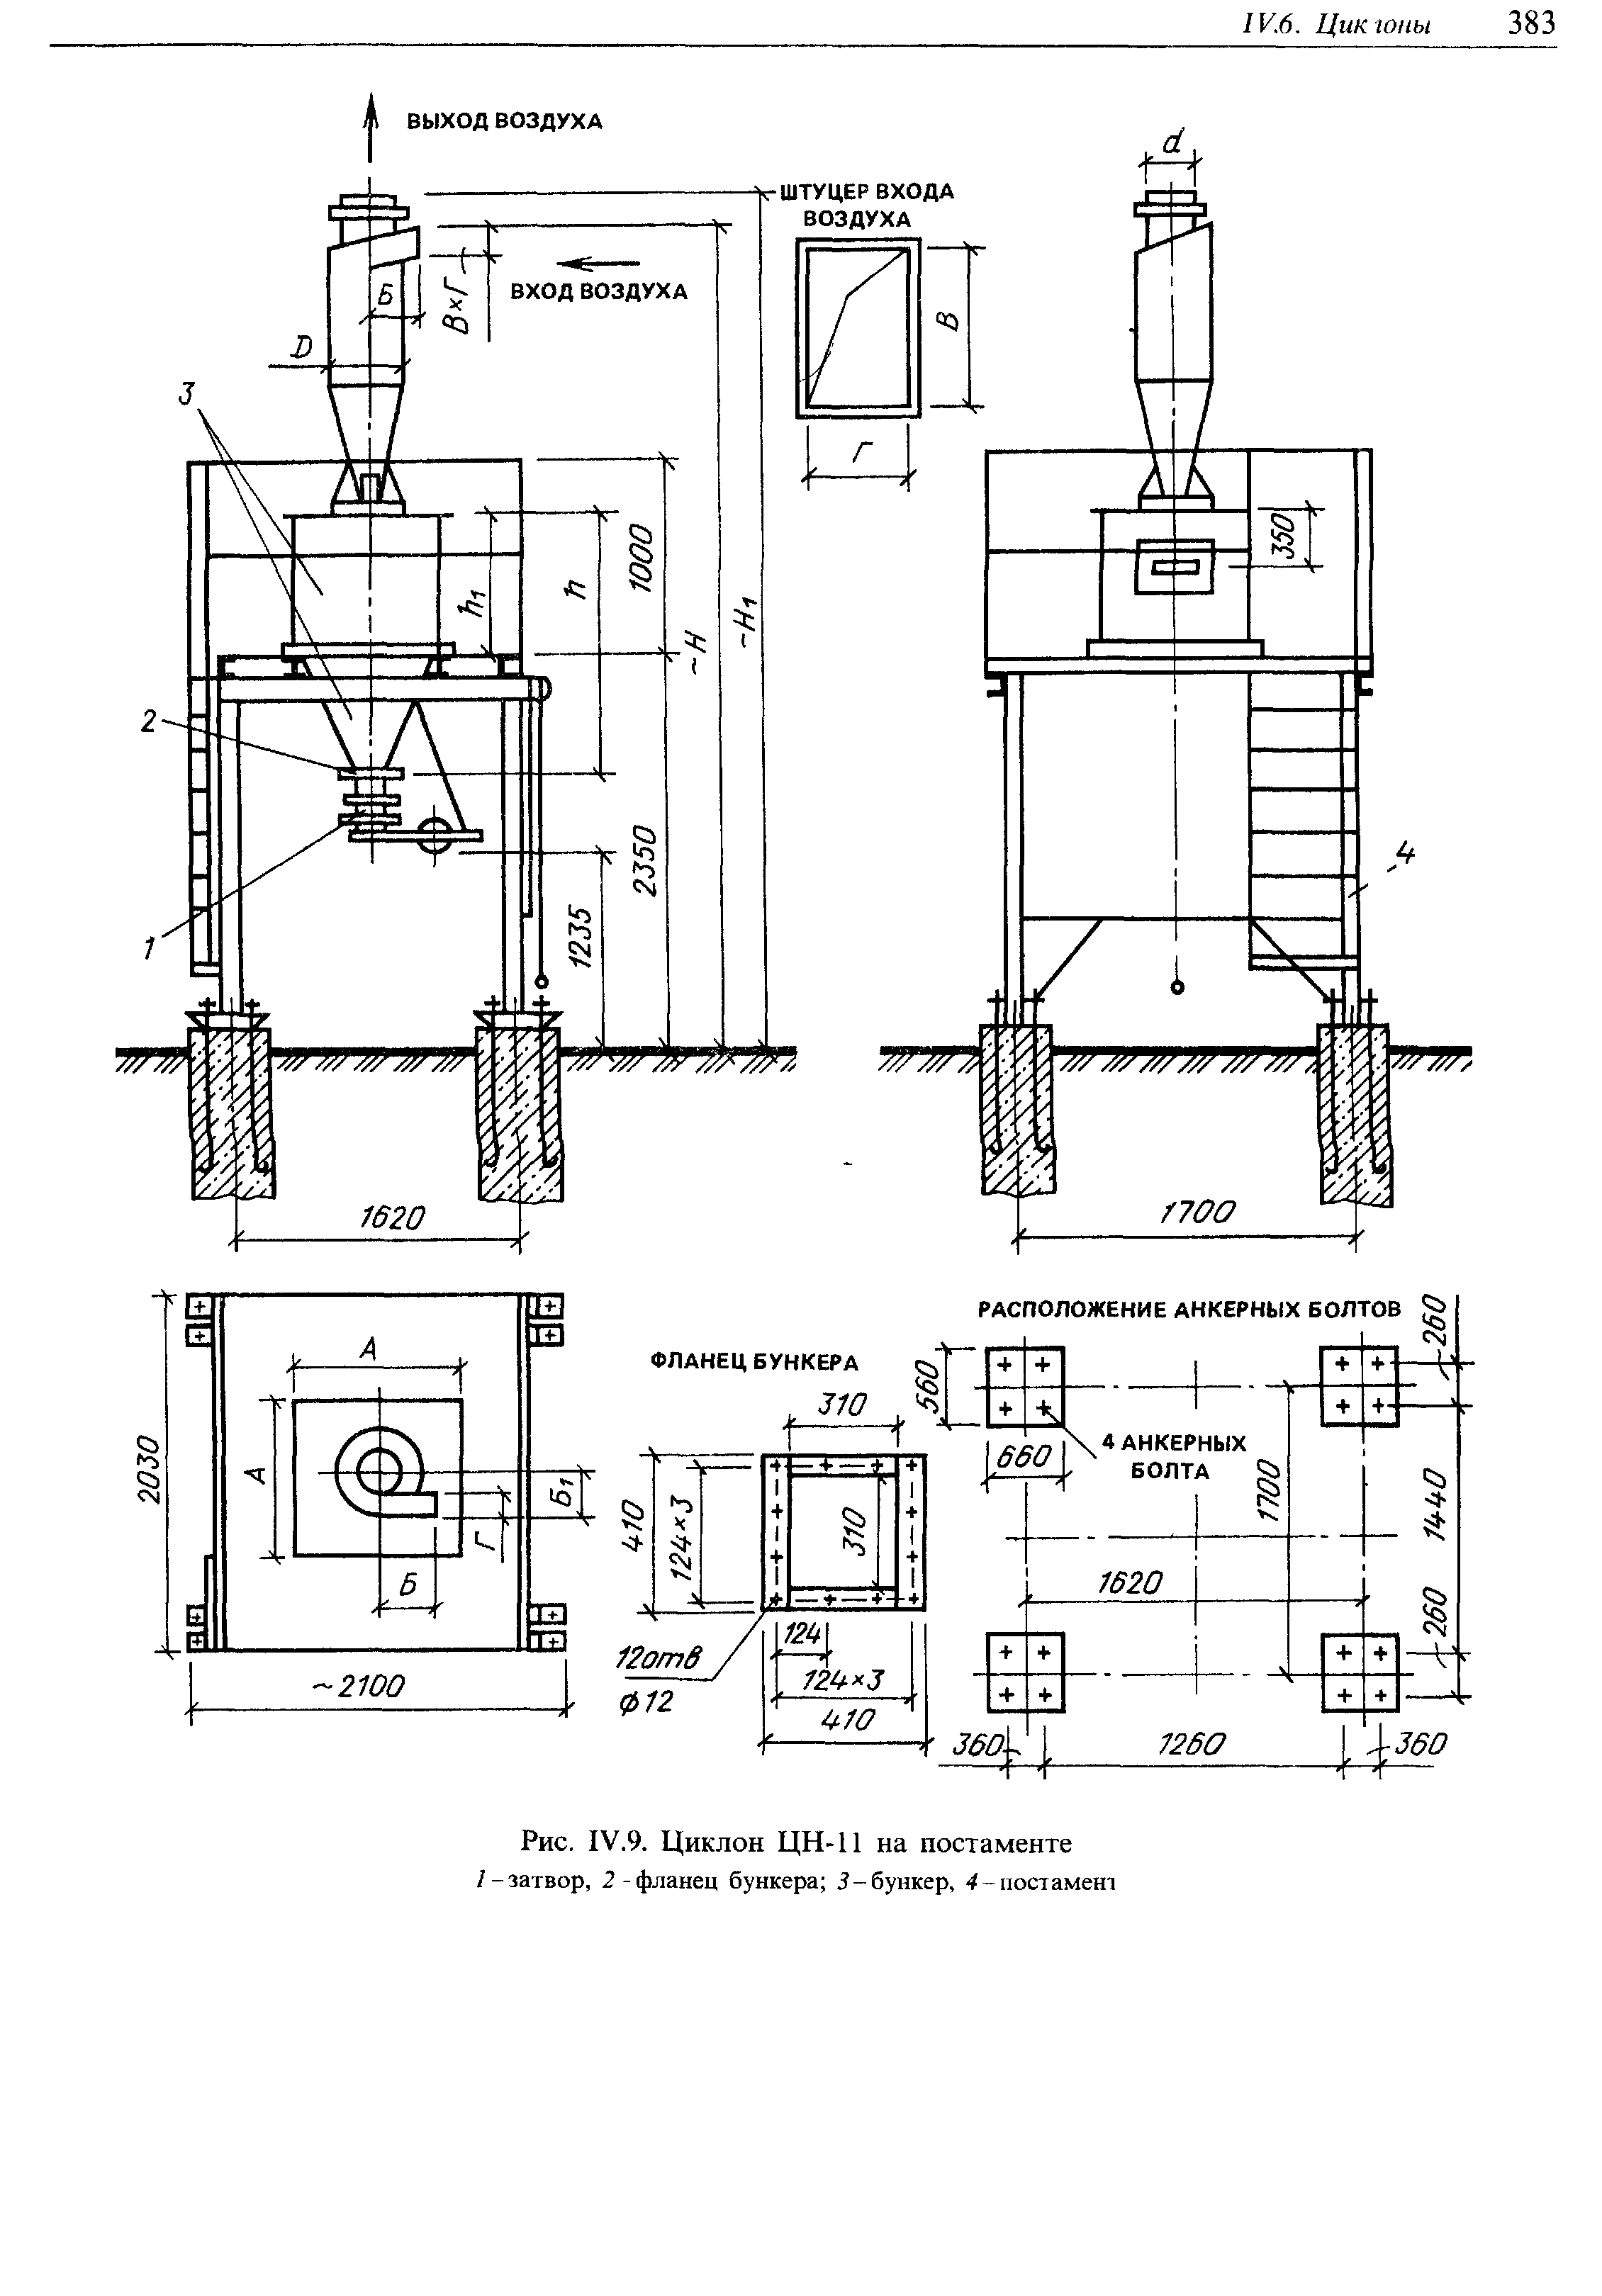 Рис. IV.9. Циклон ЦН-11 на постаменте /-затвор, 2-фланец бункера 5-бункер, 4-постамент
